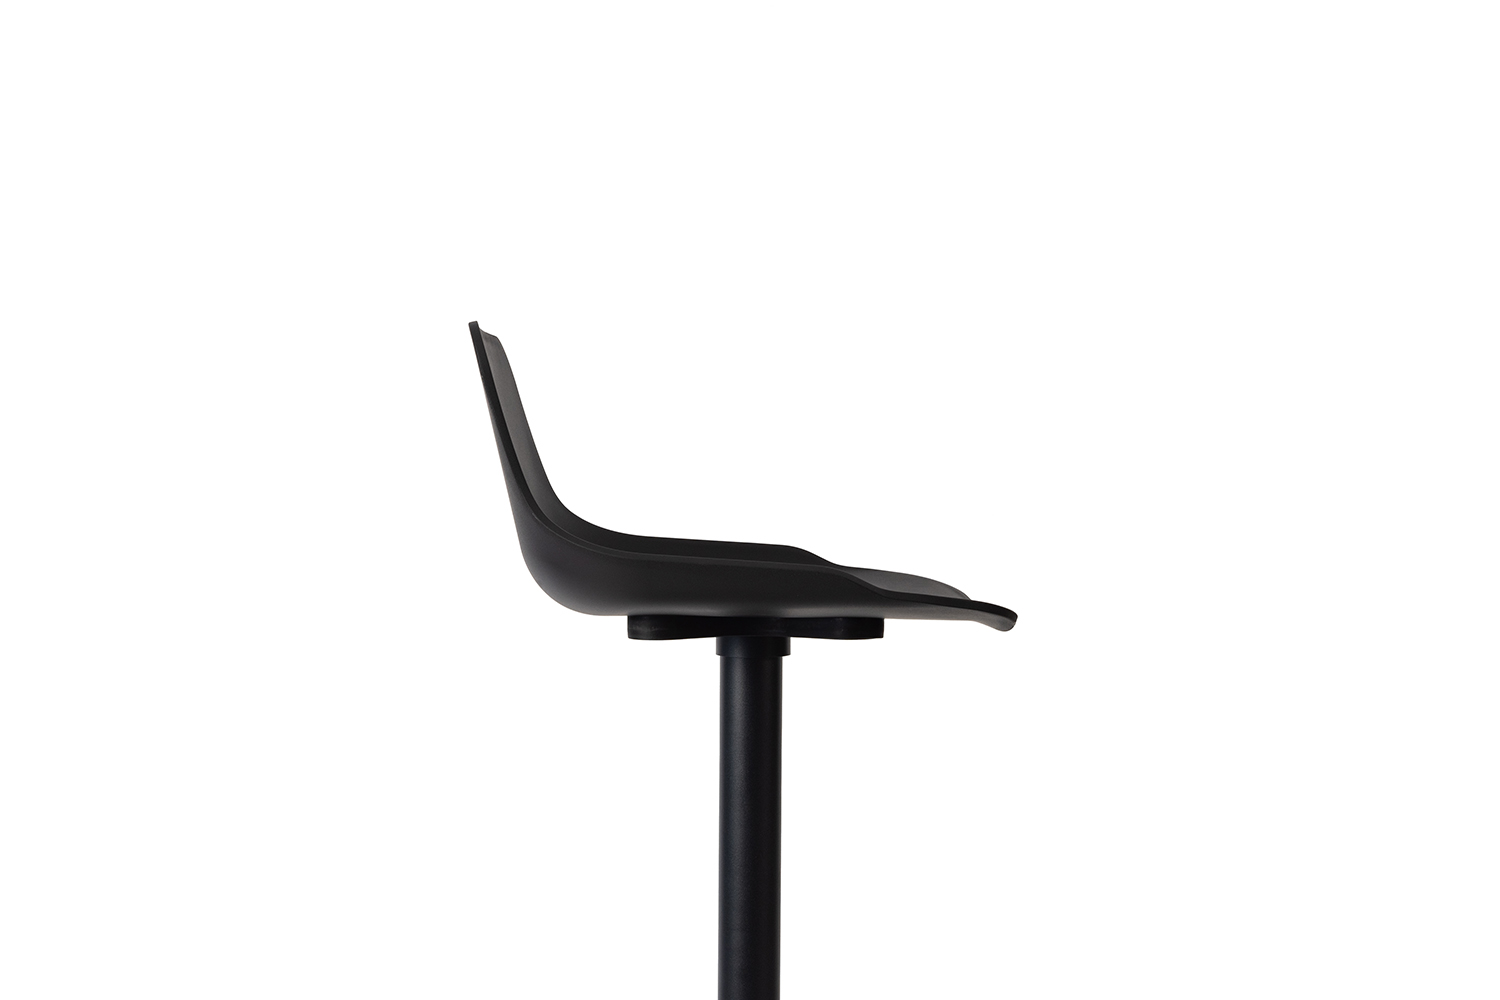 Set stools by Mario Ruiz for Sellex